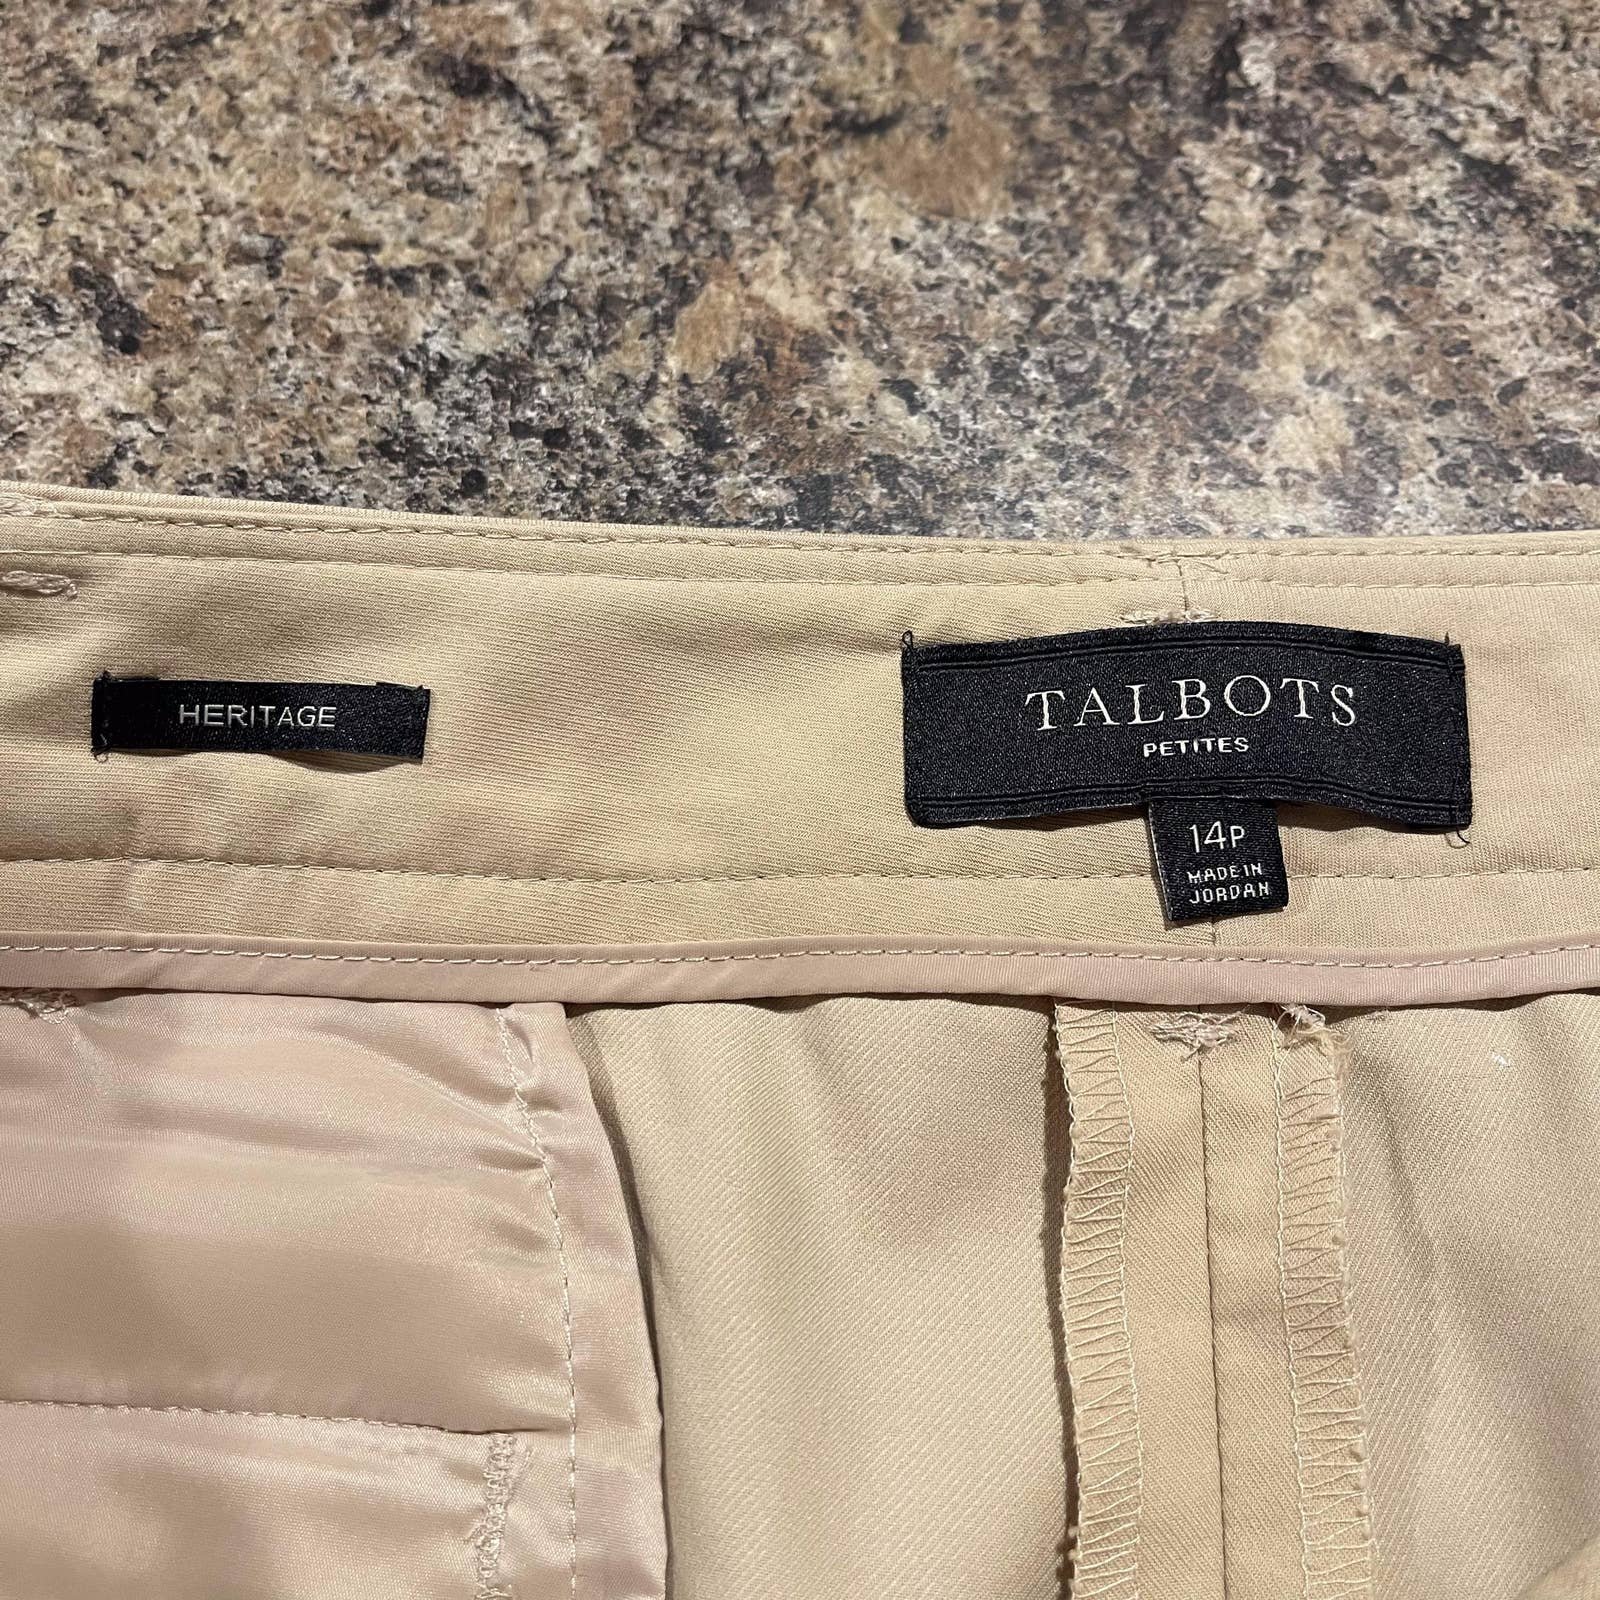 Discounted Talbots Womens Dress Pants Heritage Tan Urban Khaki 14 Petite EB PHzVWGMX7 Cheap